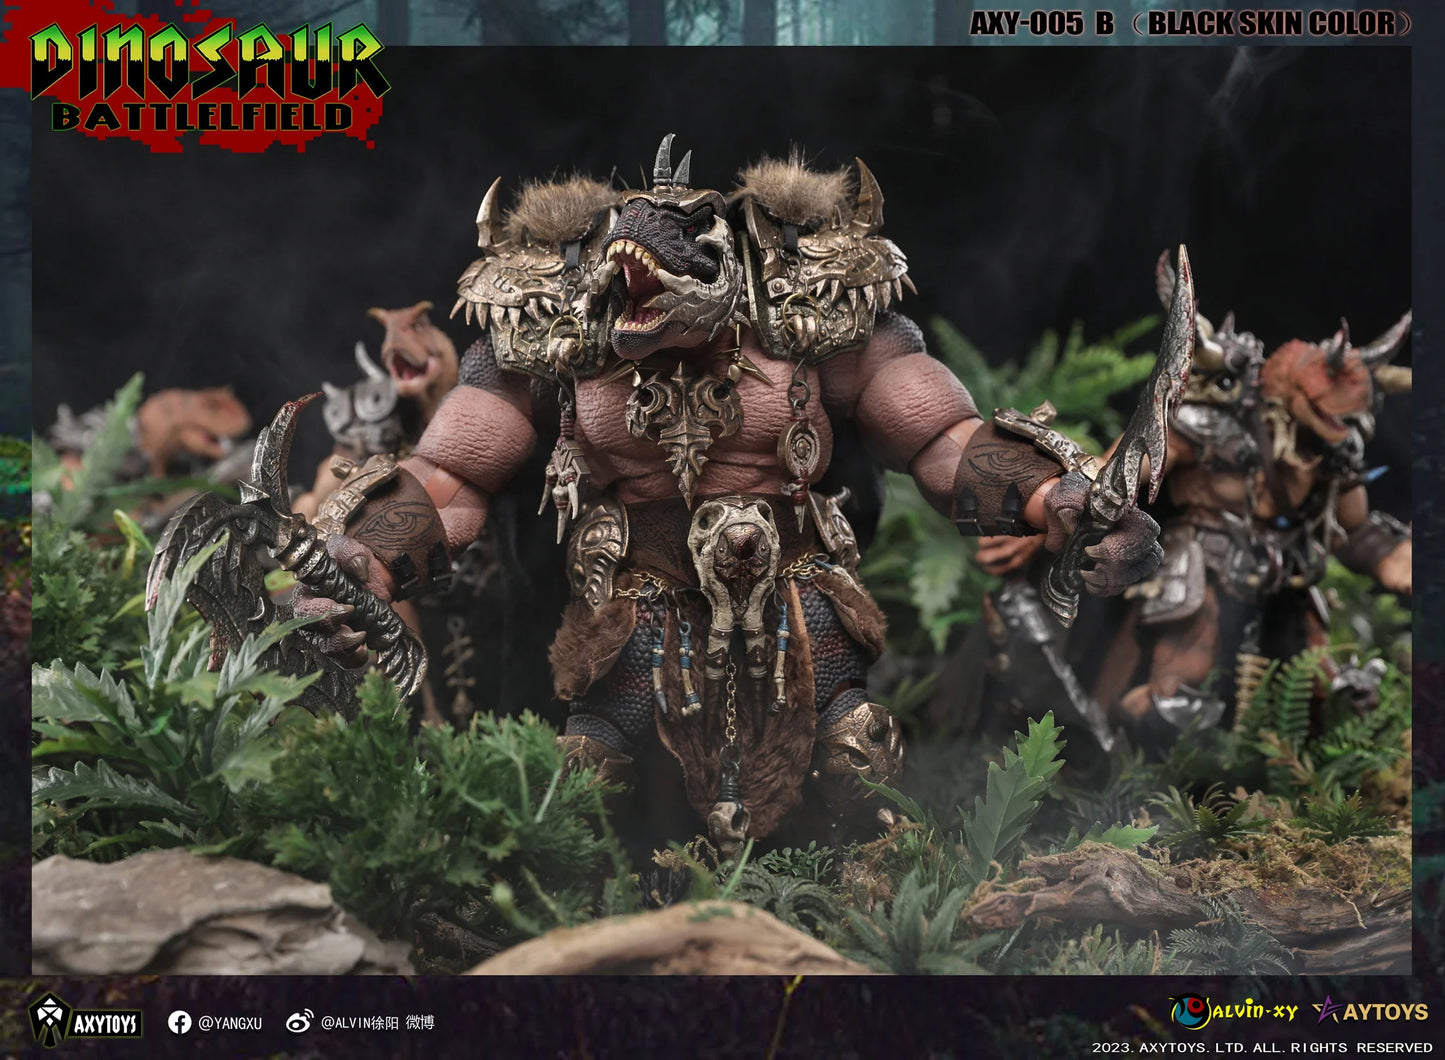 (Pre-Order) Axytoys 1/12 Dinosaur Battlefield King Tyrannosaurus Deluxe Versions with Bonus Gift - 005B